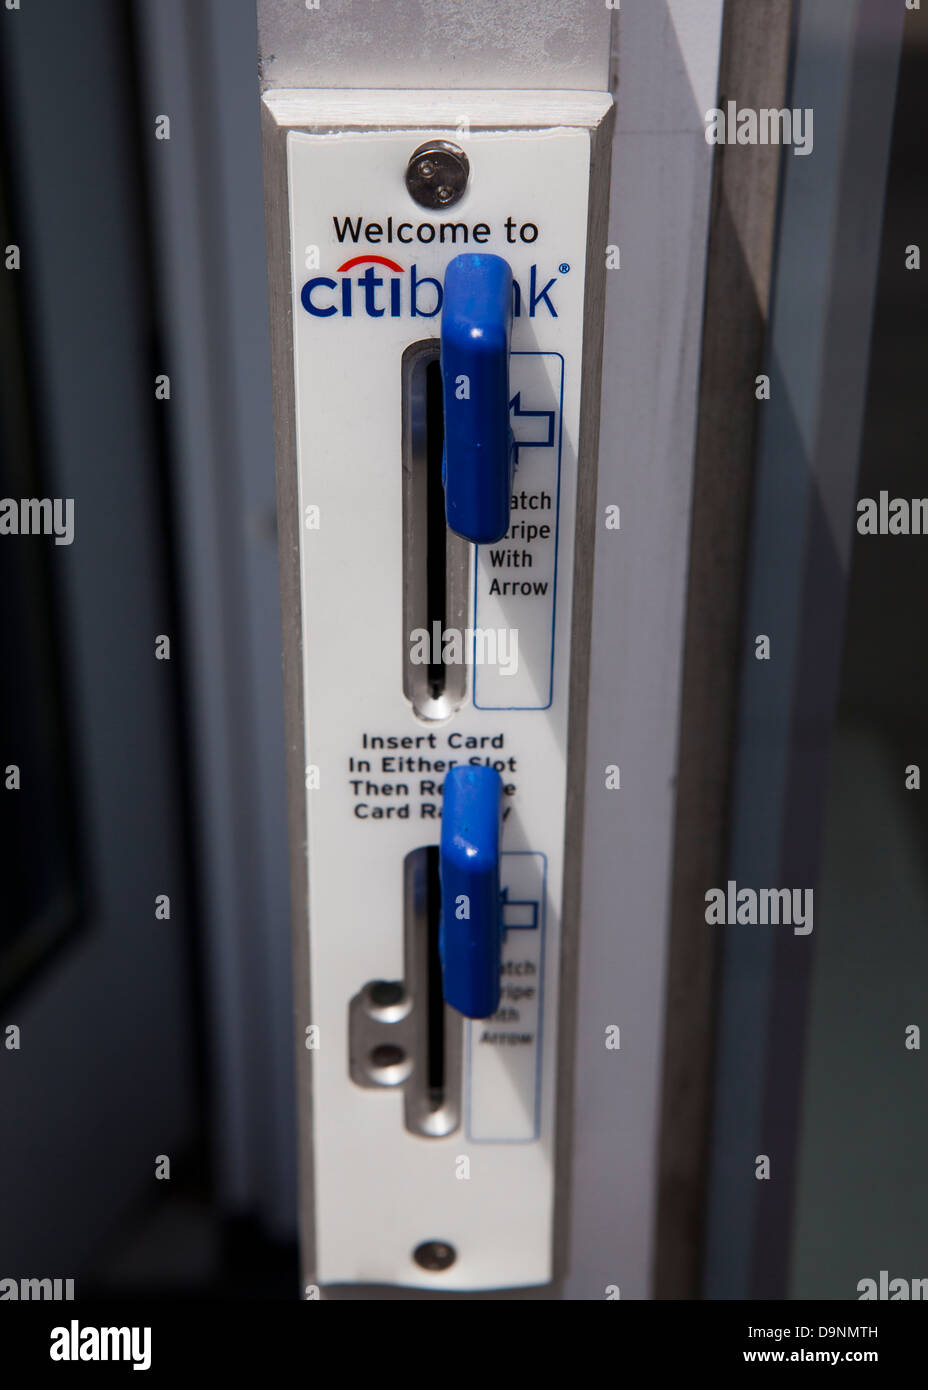 Citibank entrance door cardkey slot Stock Photo